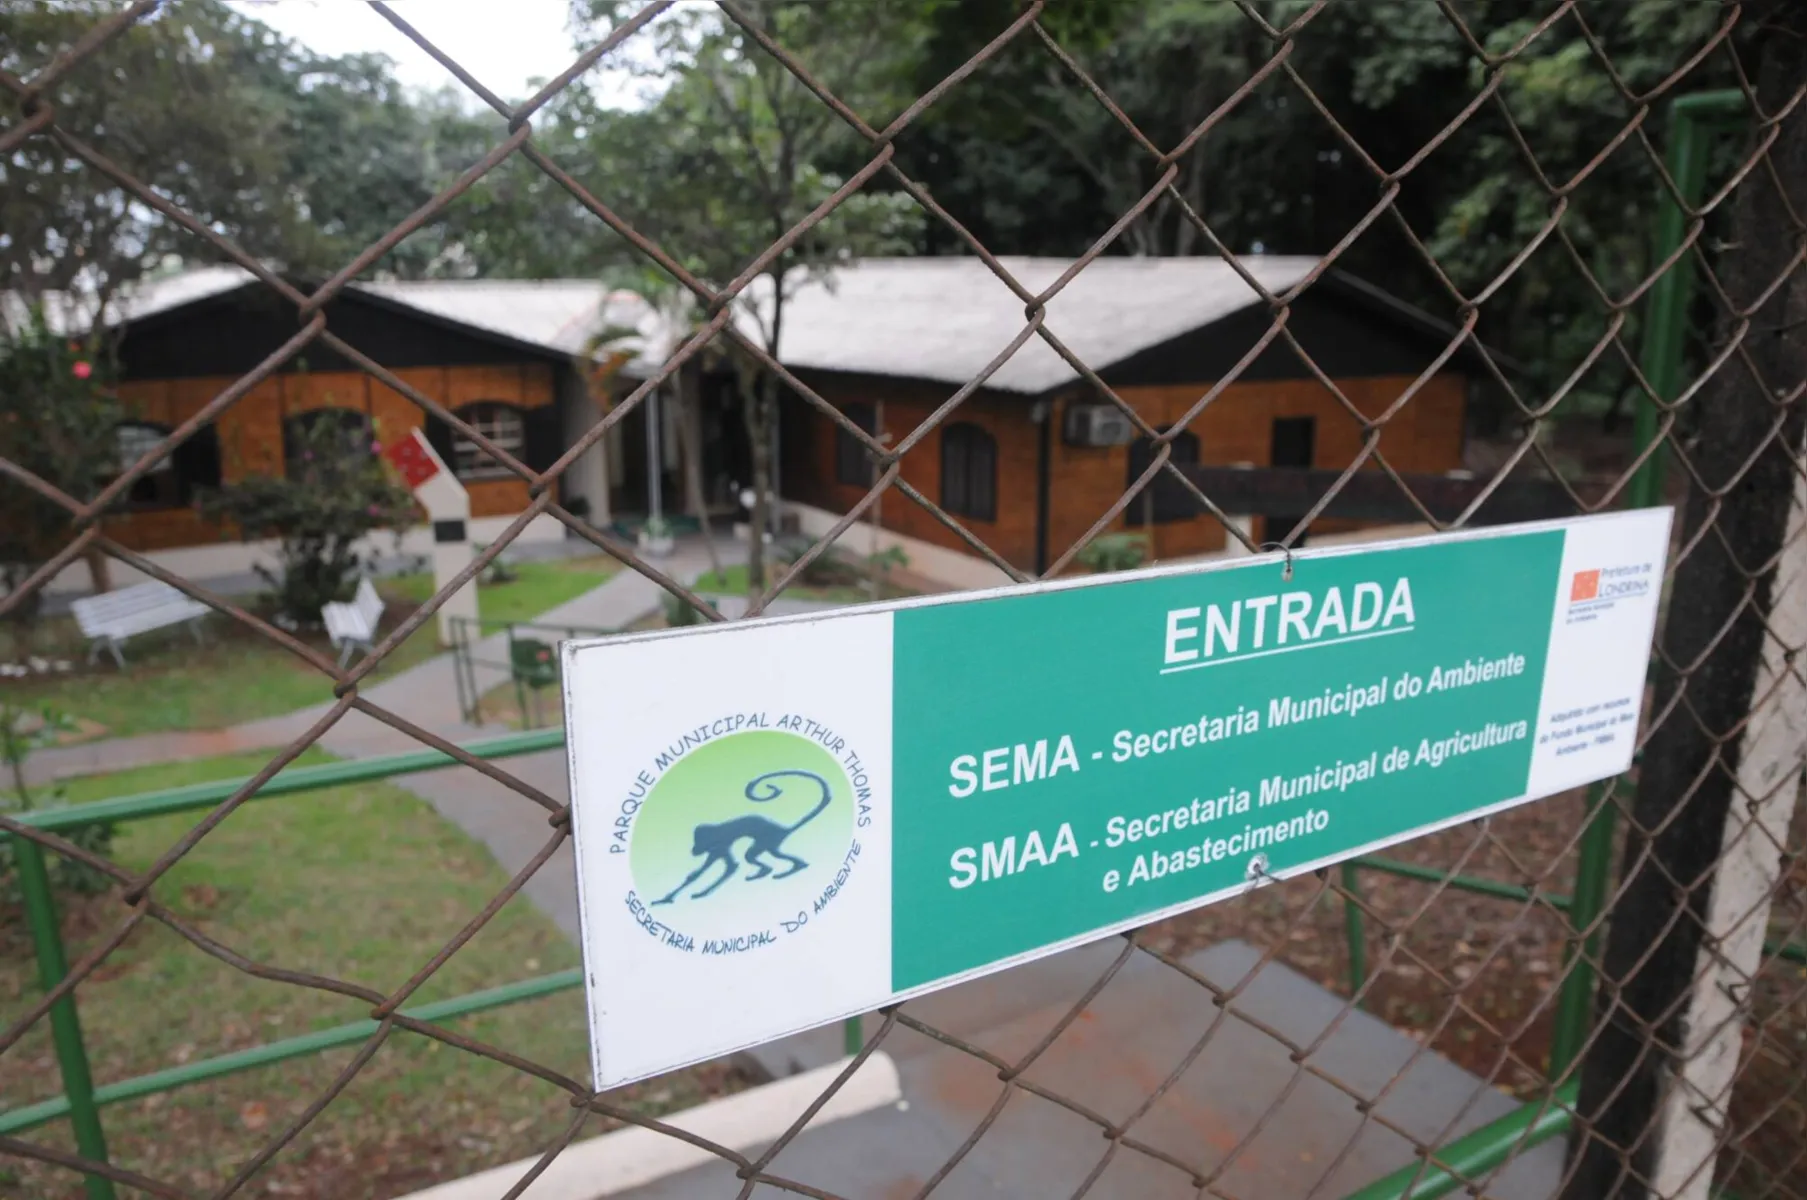 Fachada da sede da Secretaria do Ambiente de Londrina